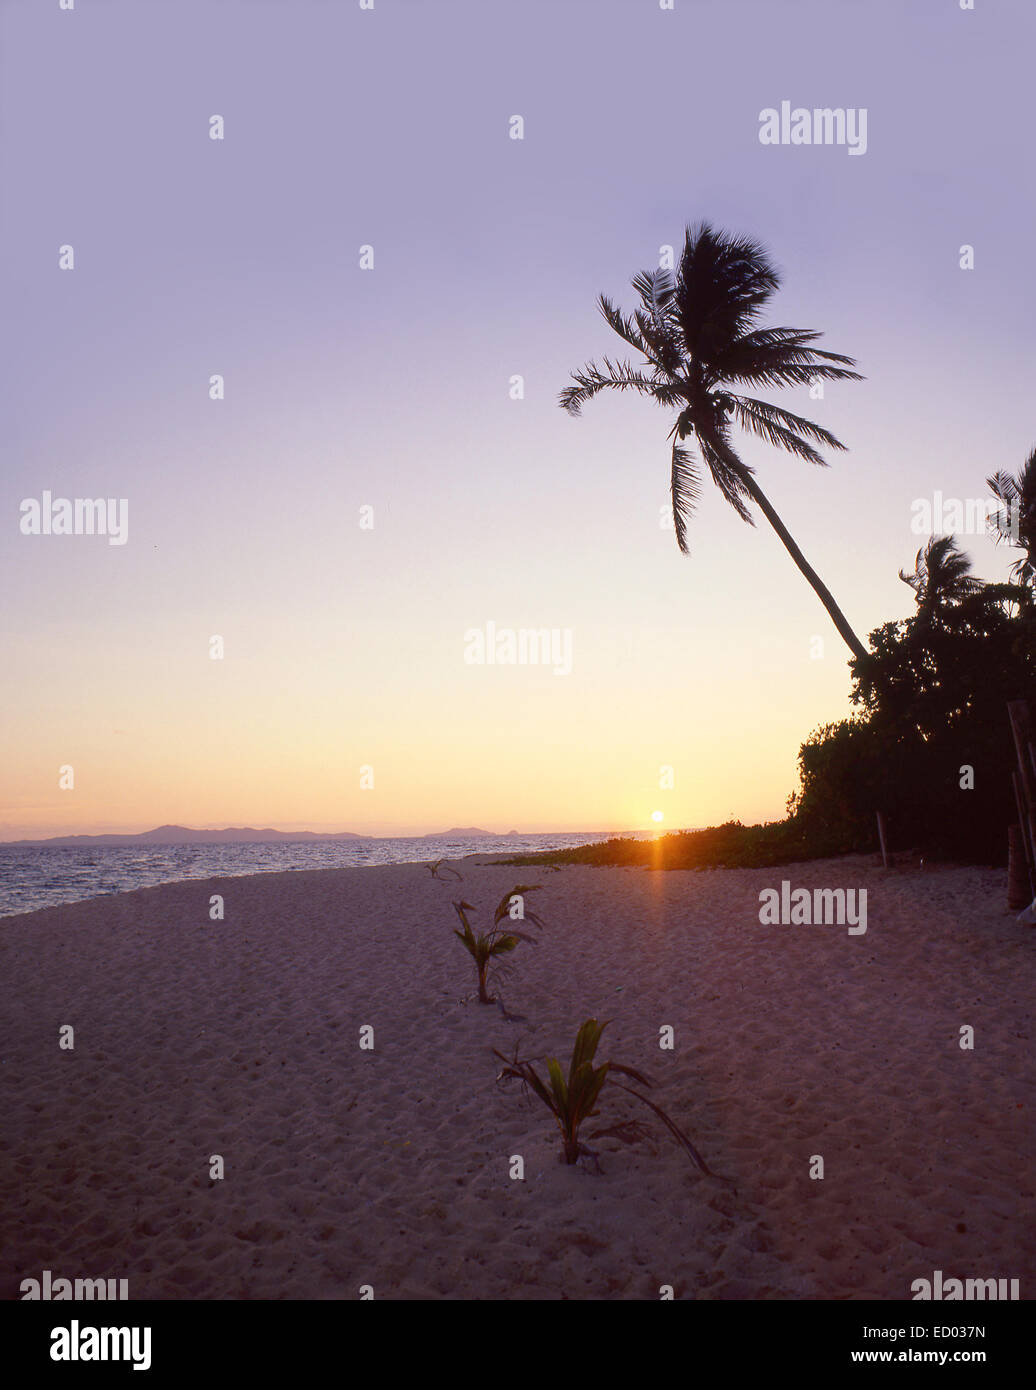 Tropischer Sonnenuntergang, Beachcomber Island Resort, Beachcomber Island, Mamanuca Inseln, Viti Levu, Republik Fidschi-Inseln Stockfoto